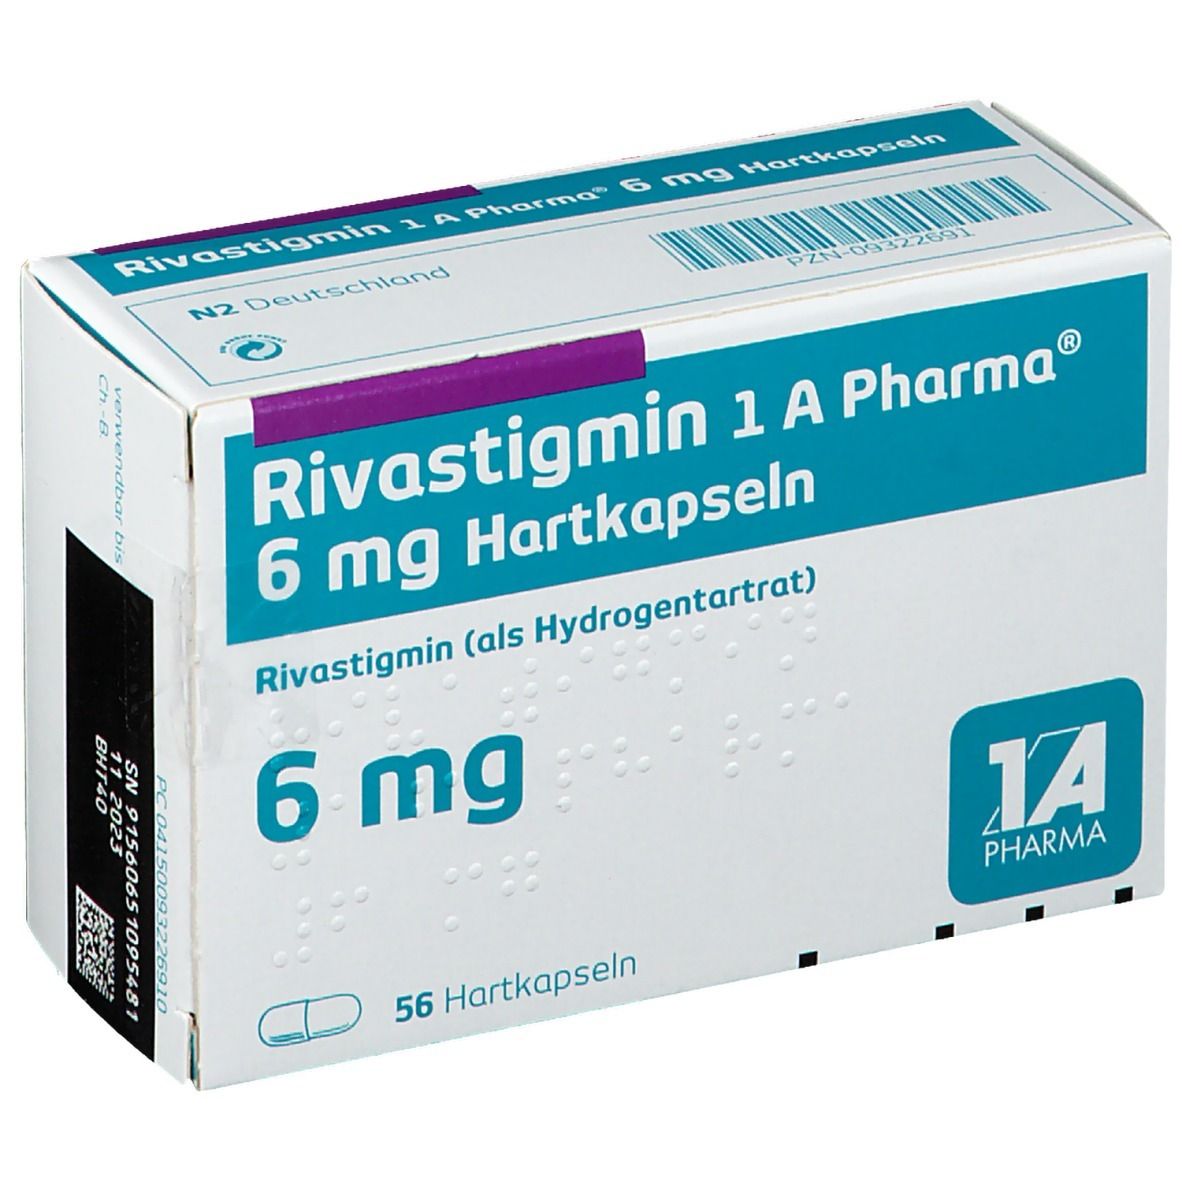 Rivastigmin 1 A Pharma® 6 mg